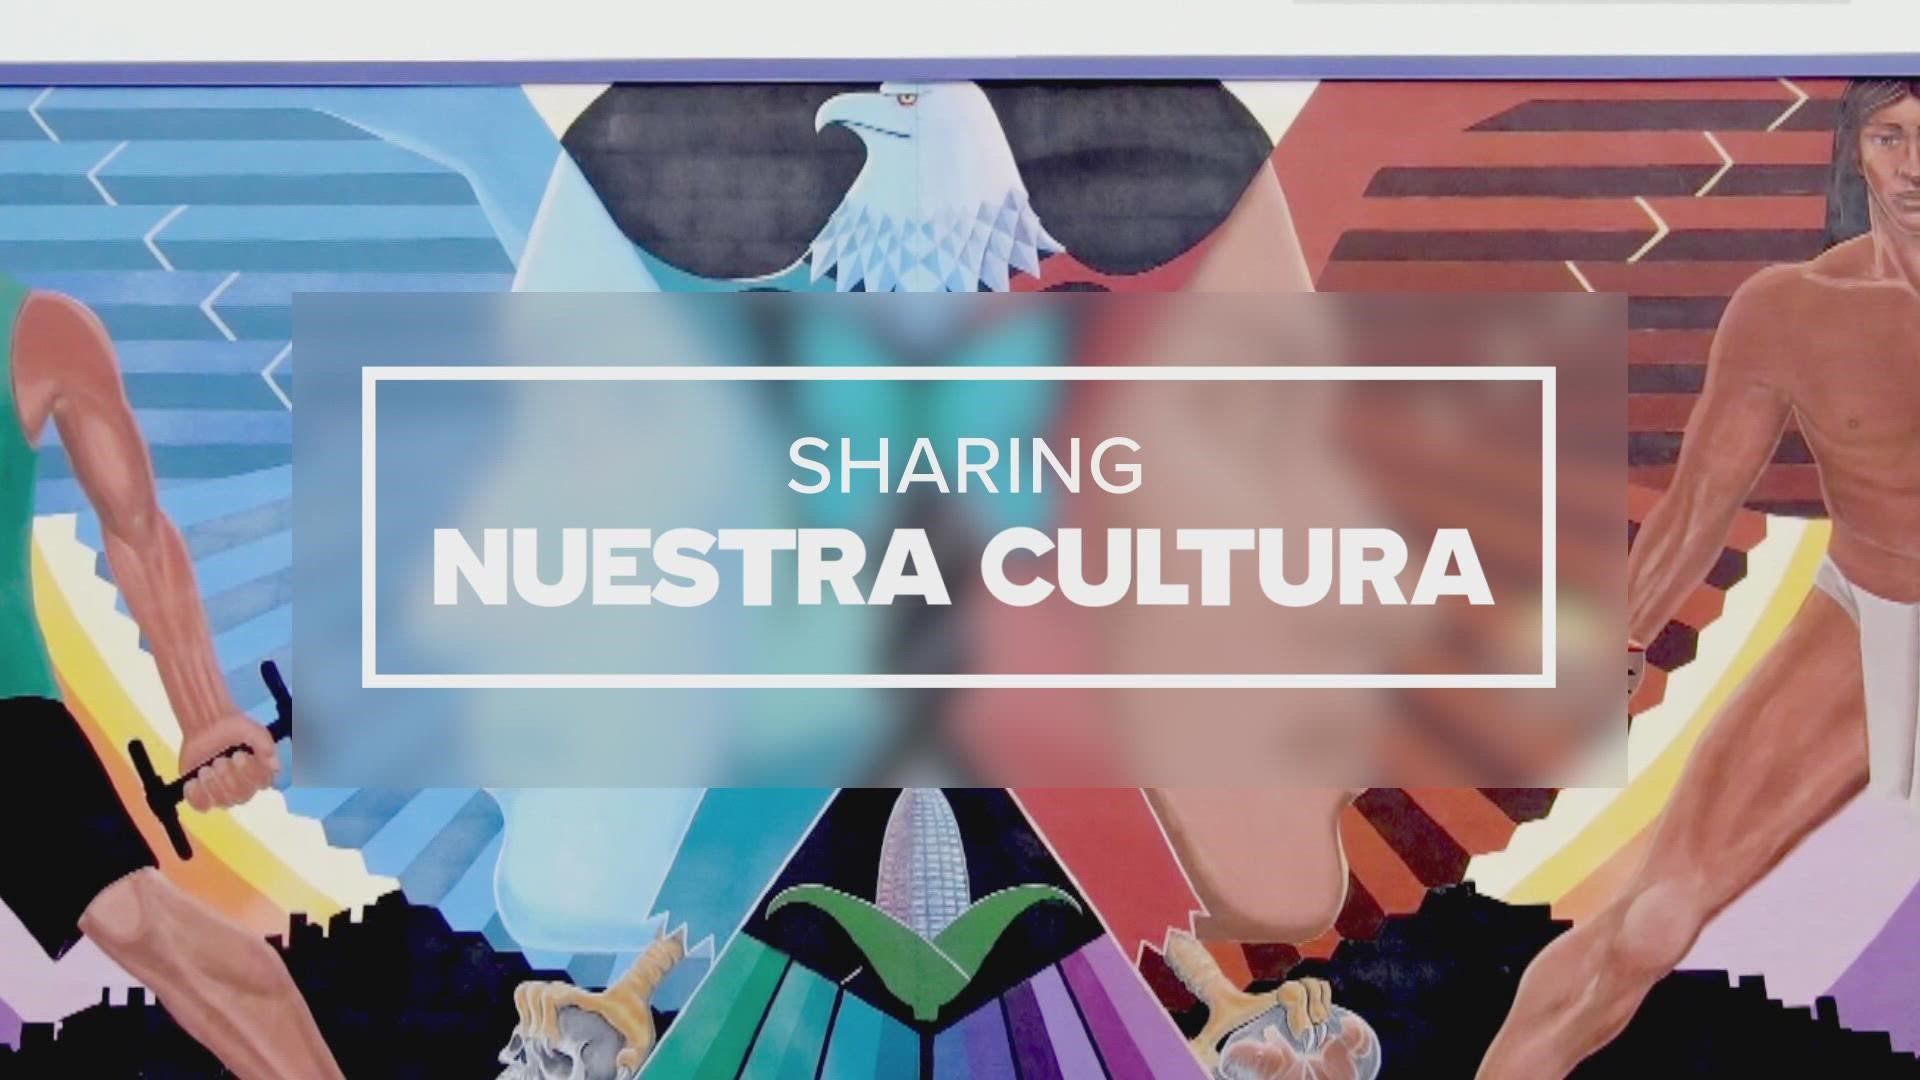 9NEWS shares the stories of Denver's Hispanic and Latino communities.